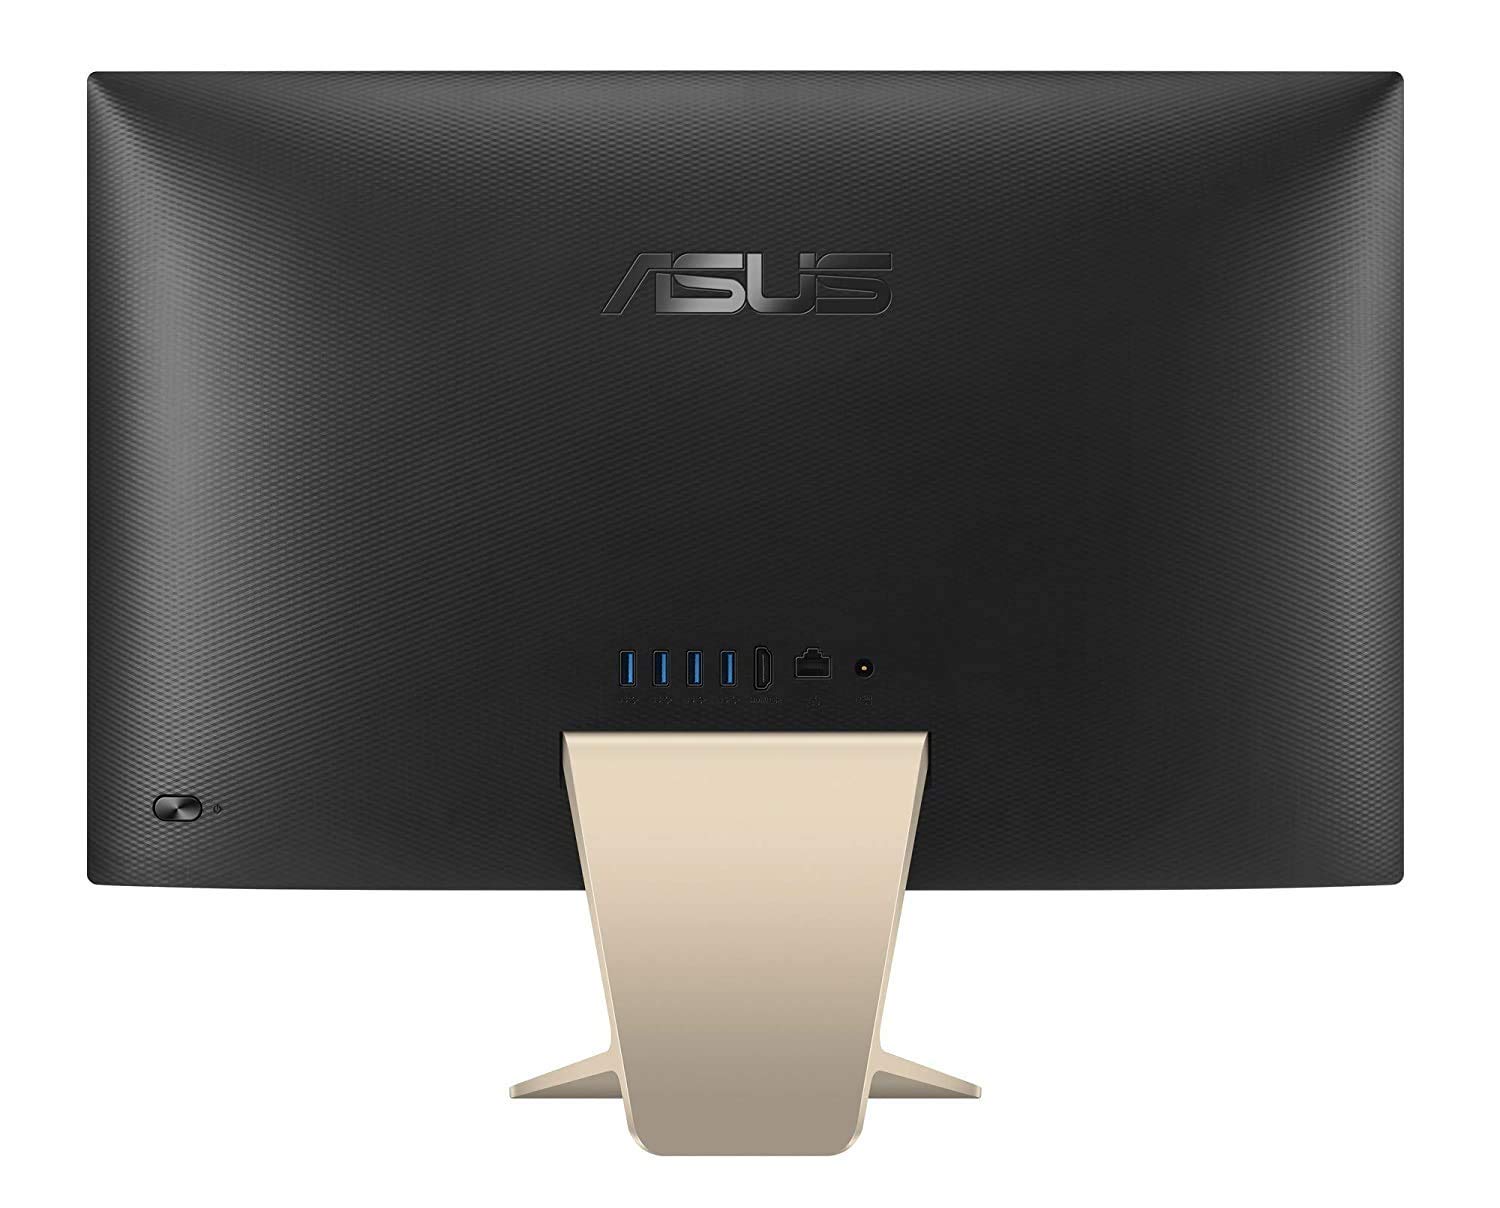 ASUS Vivo AiO V222GAK-BA022T 21.5-inch HD All-in-One Desktop